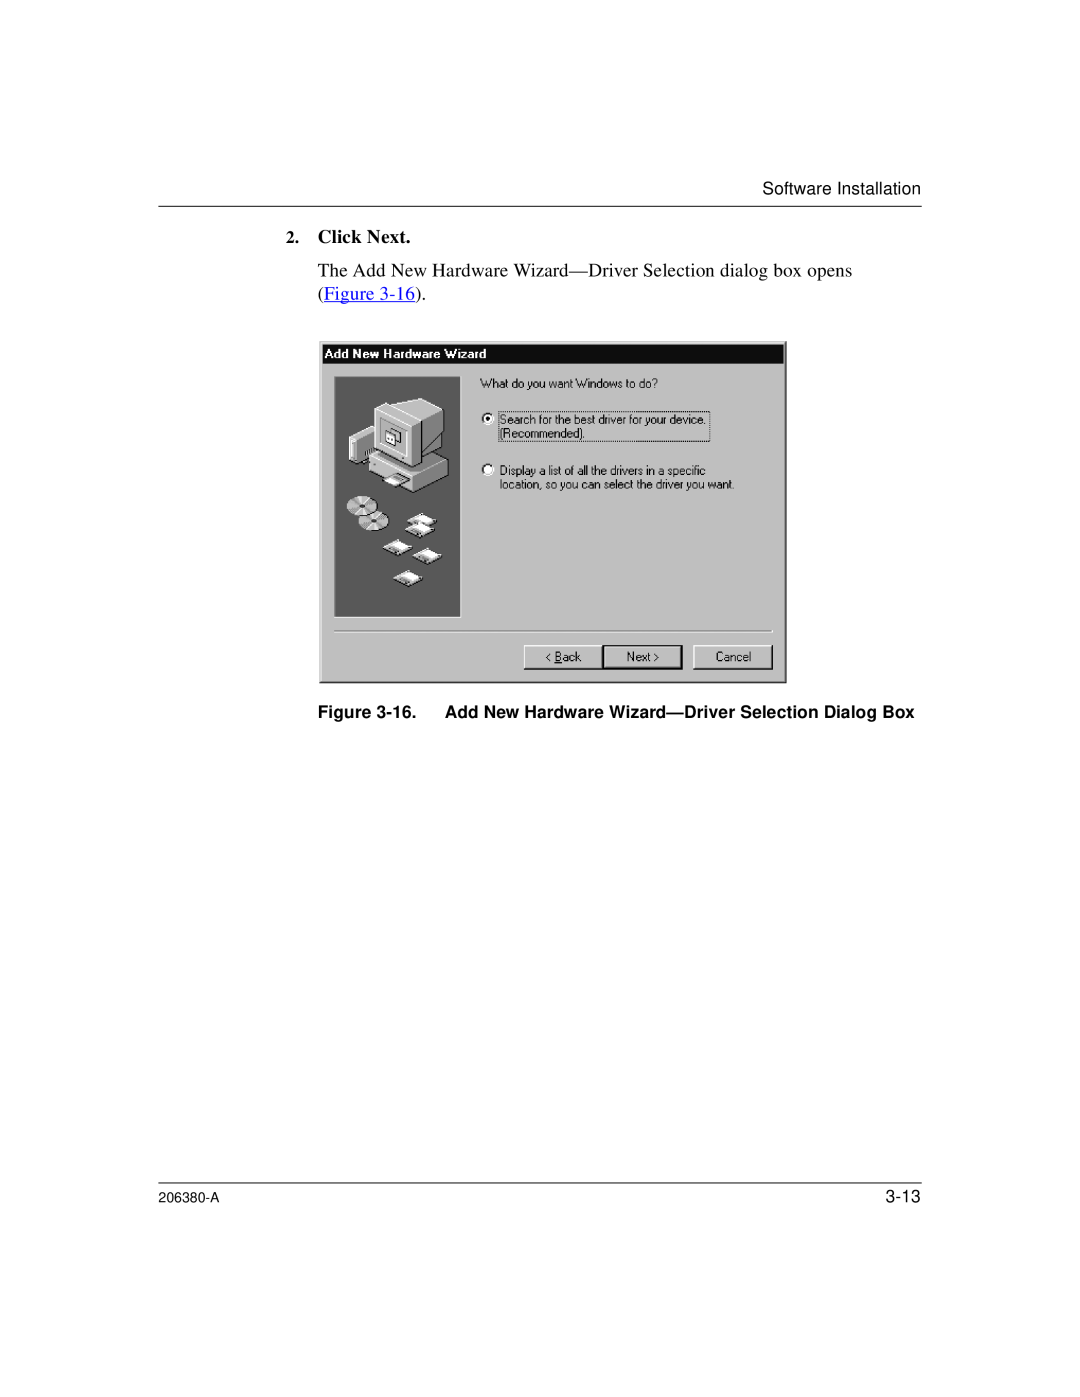 3Com 206380-A manual Click Next, Software Installation, 3-13 